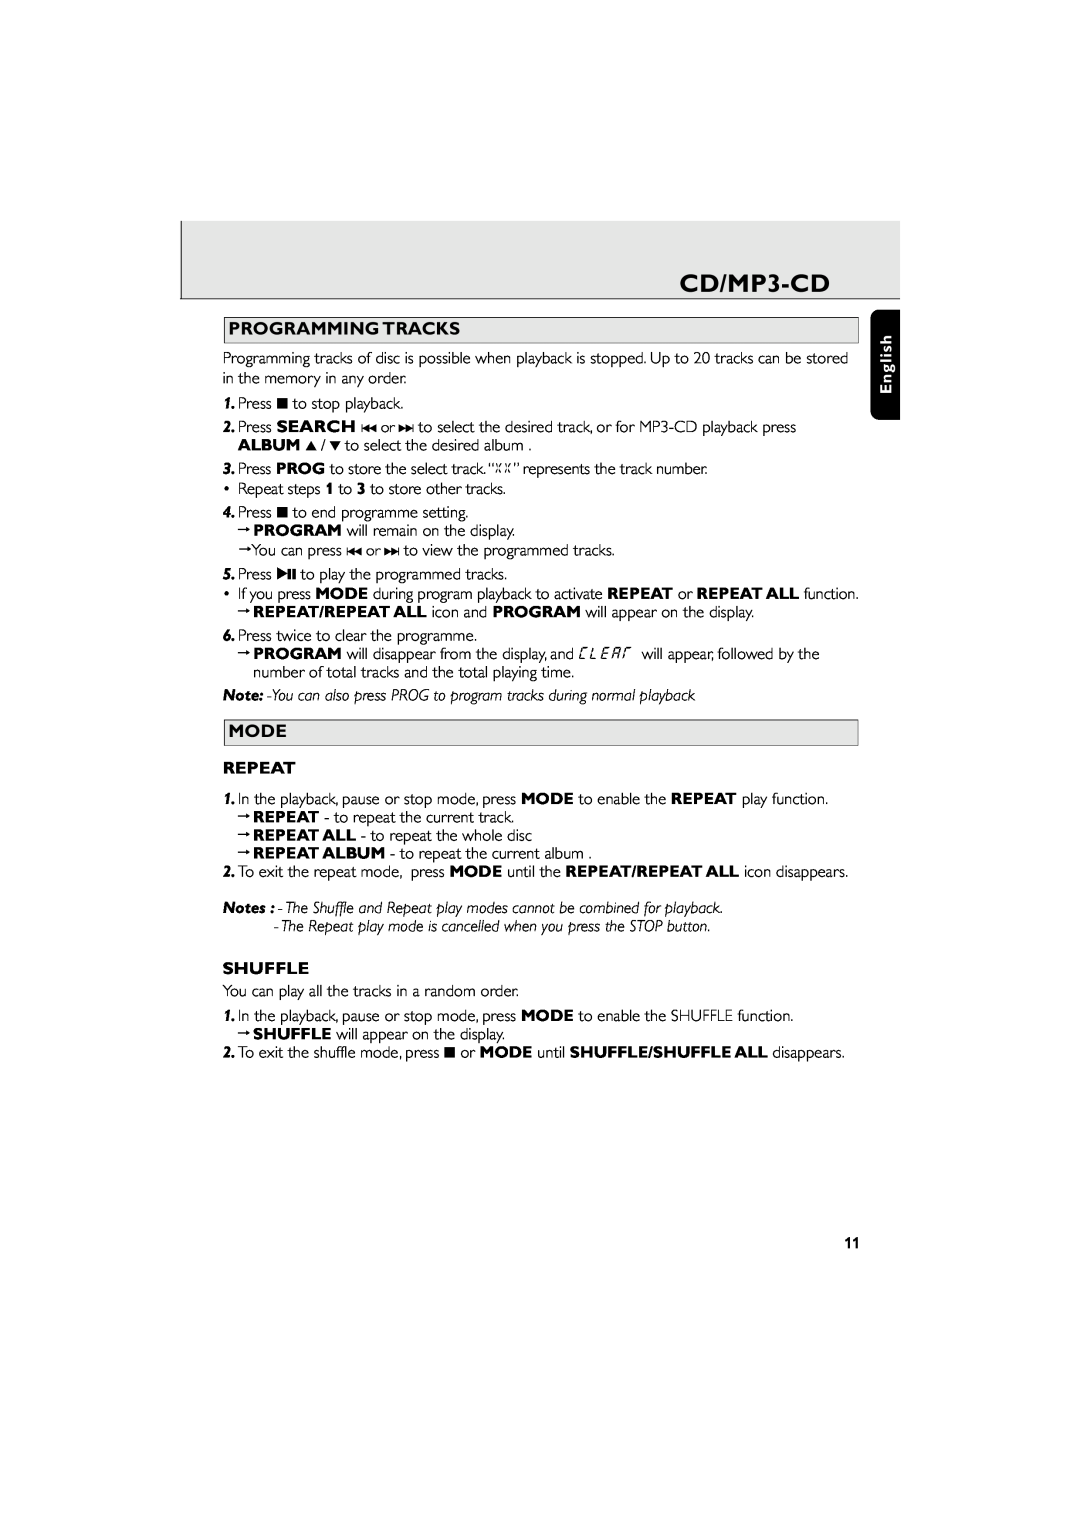 Philips AZ 6188 manual CD/MP3-CD, Programming Tracks, Mode, Repeat, Shuffle, English 